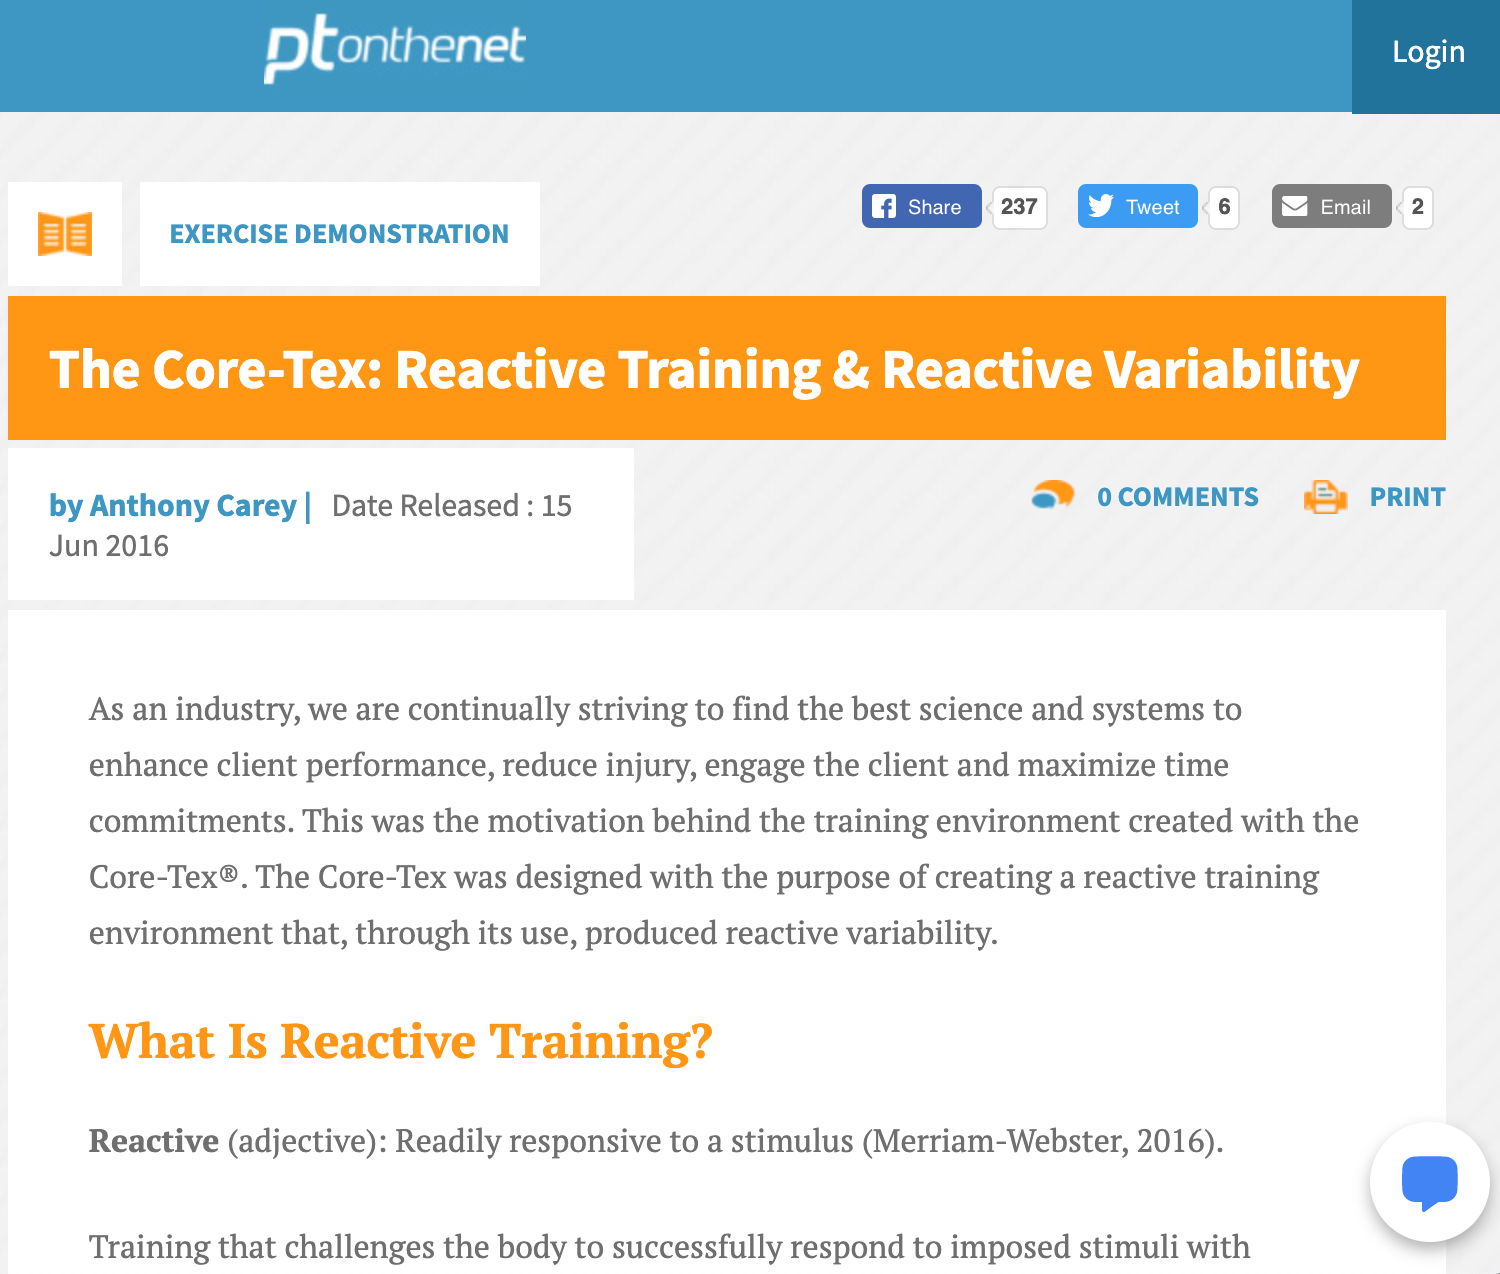 PTONTHENET.COM, JUNE 15, 2016: The Core-Tex: Reactive Training & Reactive Variability